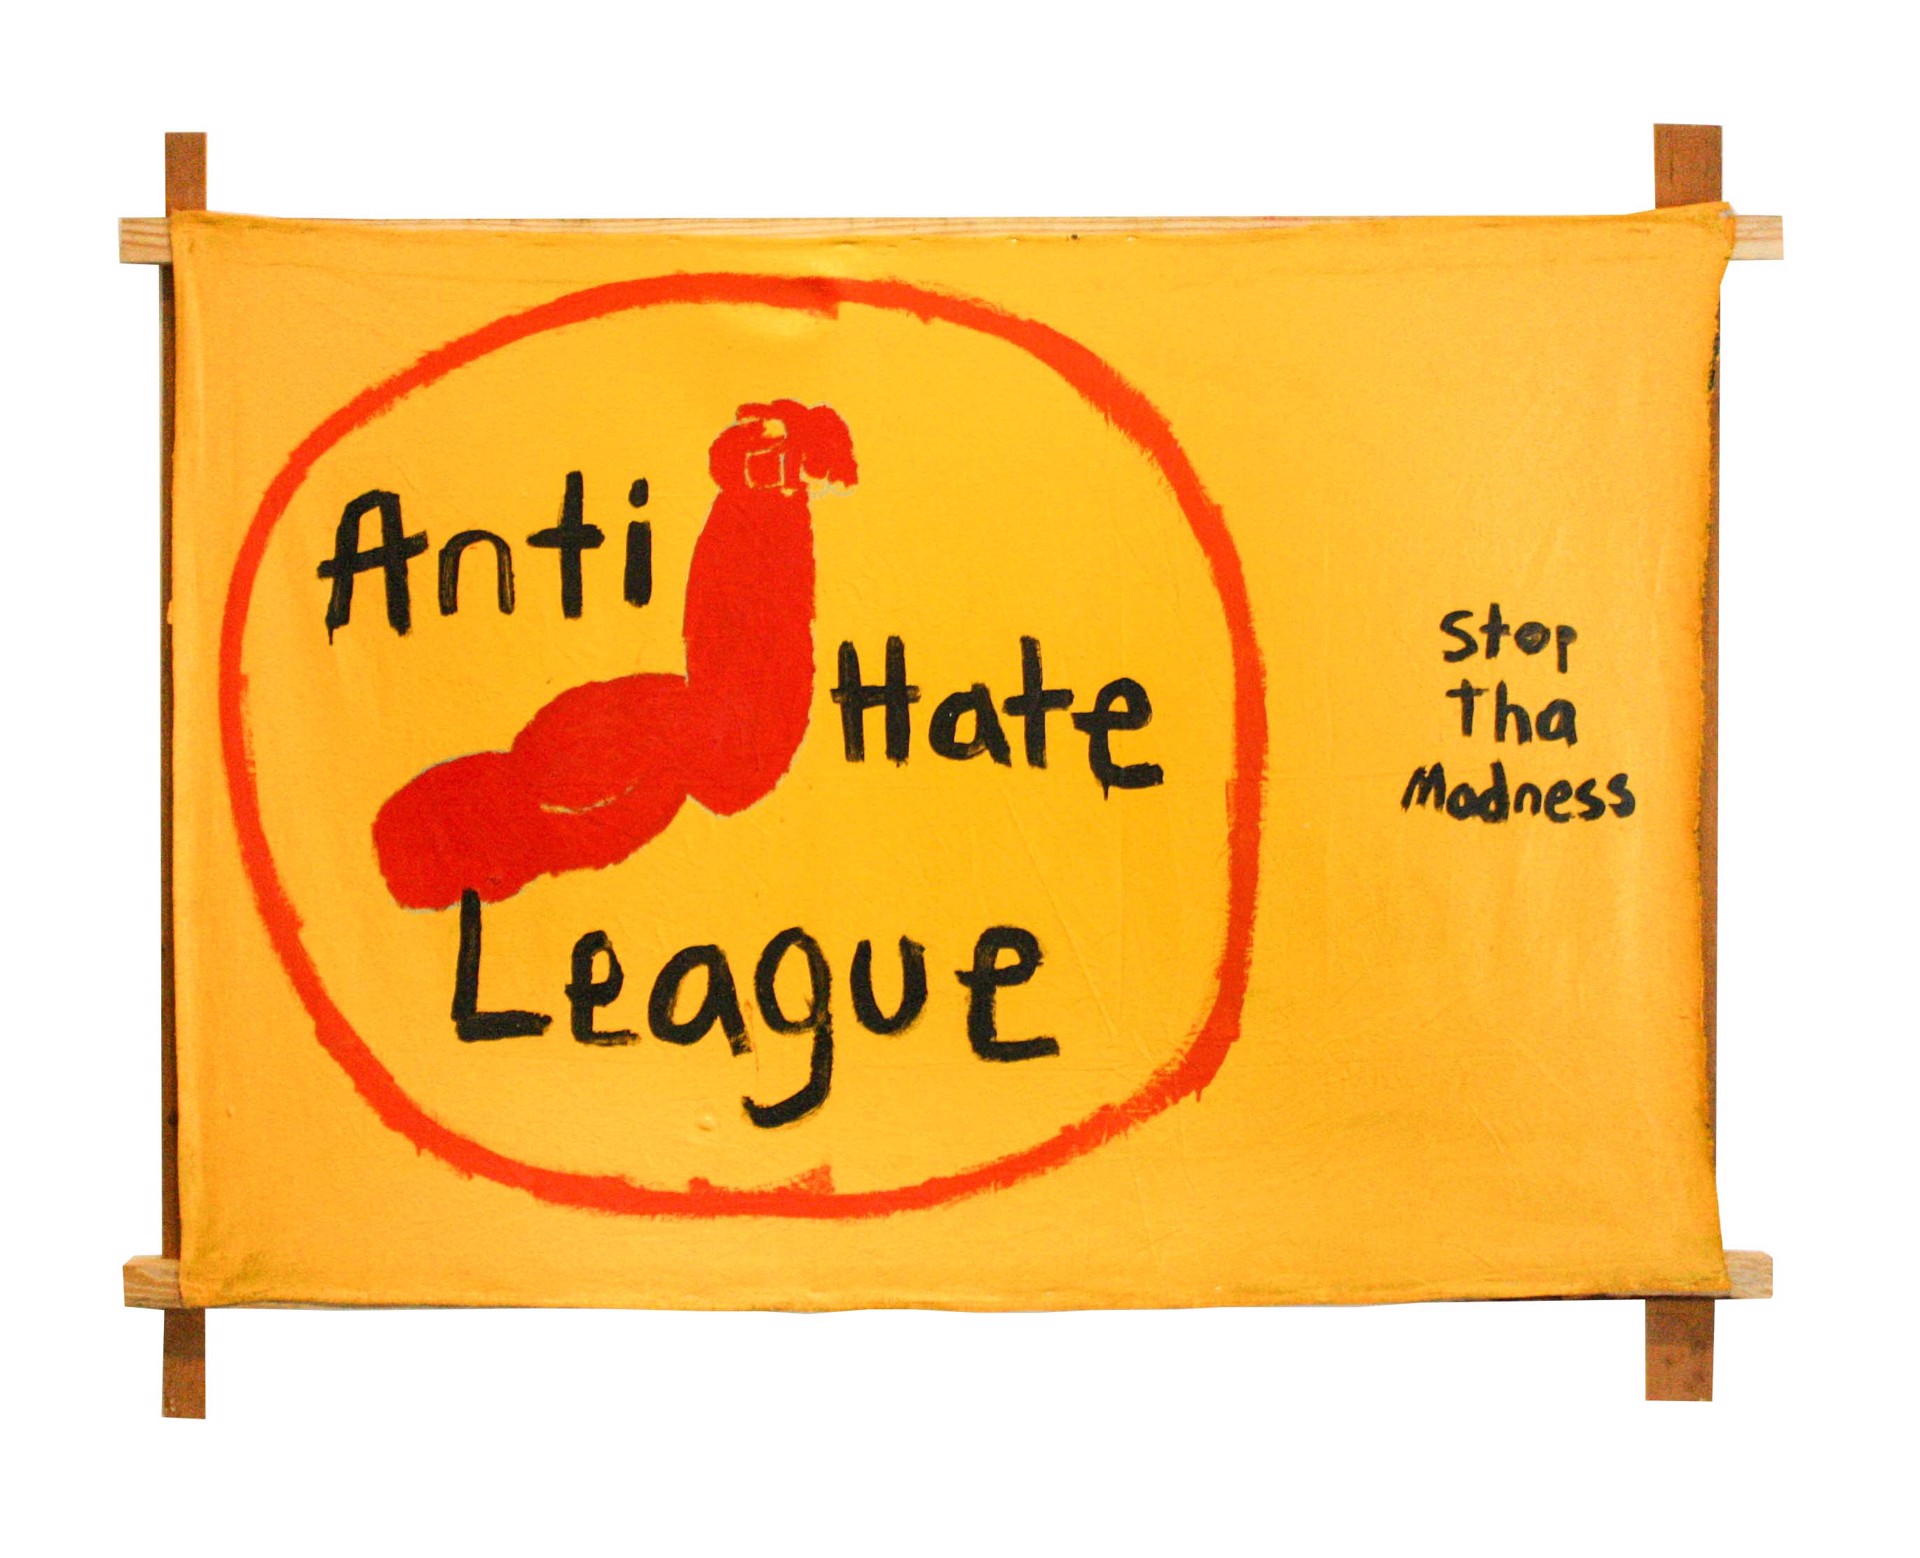 Anti Hate League by Marlos E'van